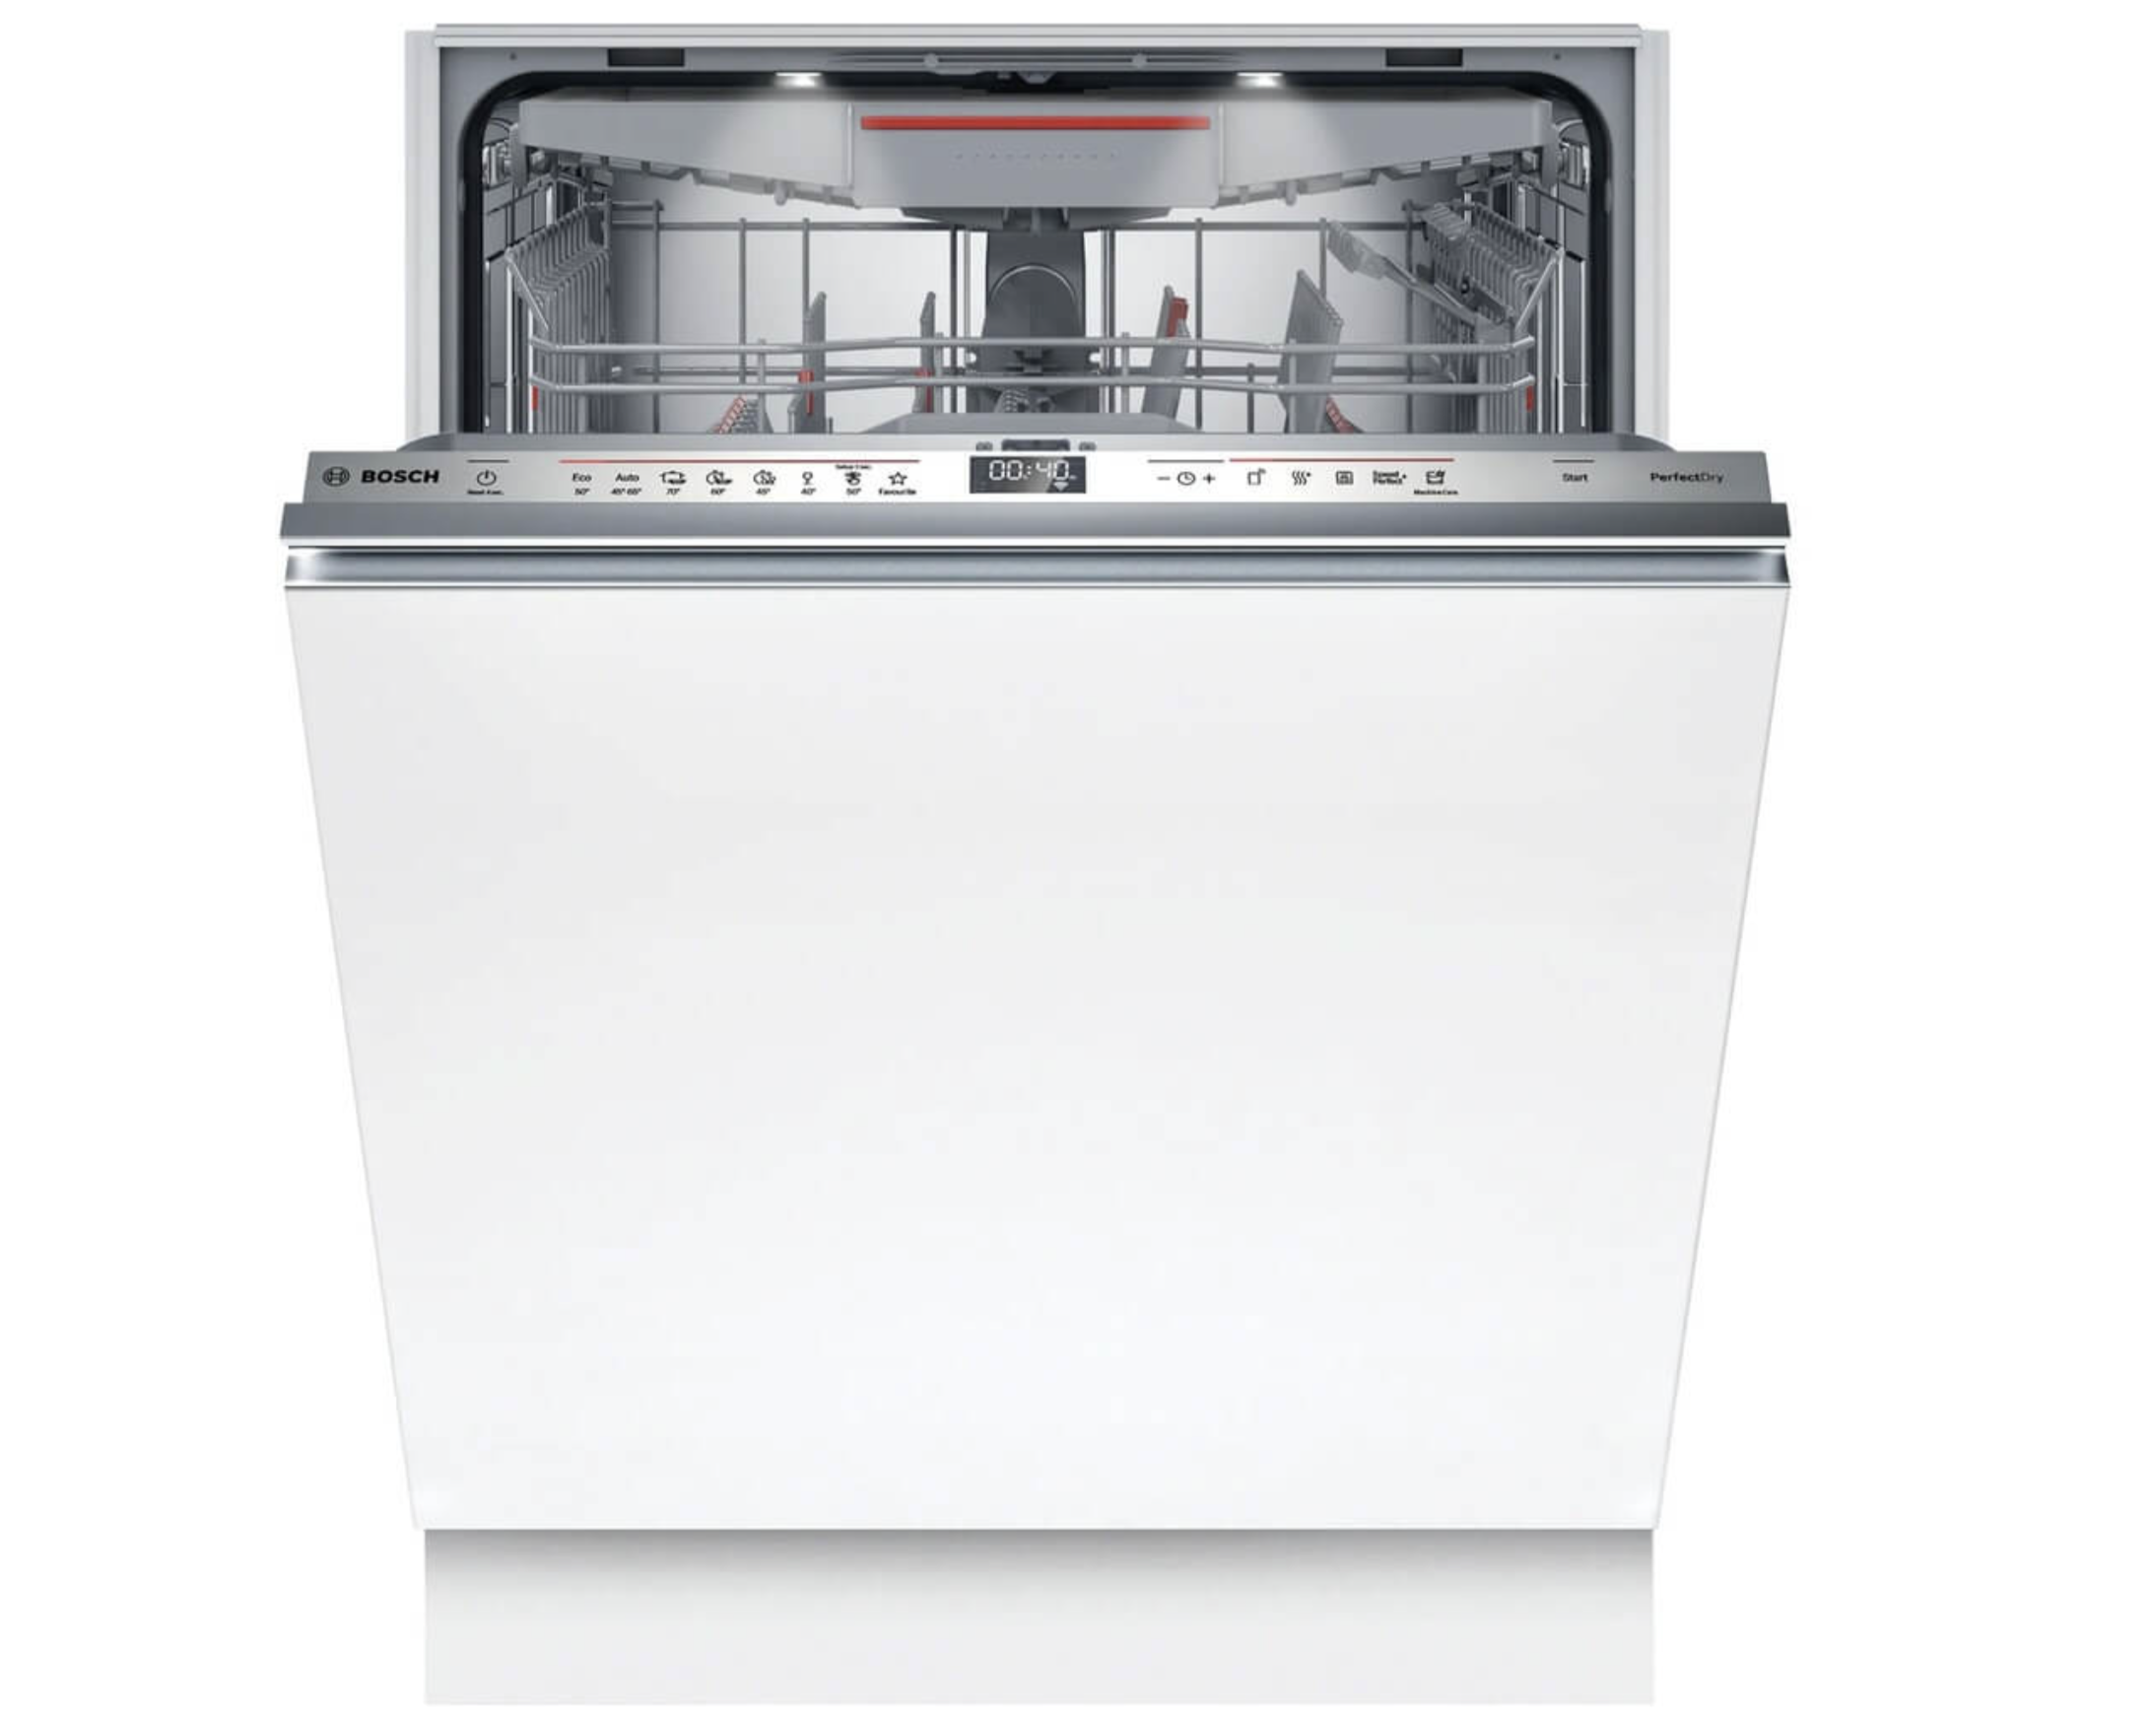 Встраиваемая посудомоечная машина Bosch BV6ZCX49E встраиваемая посудомоечная машина bosch spv6ymx08e